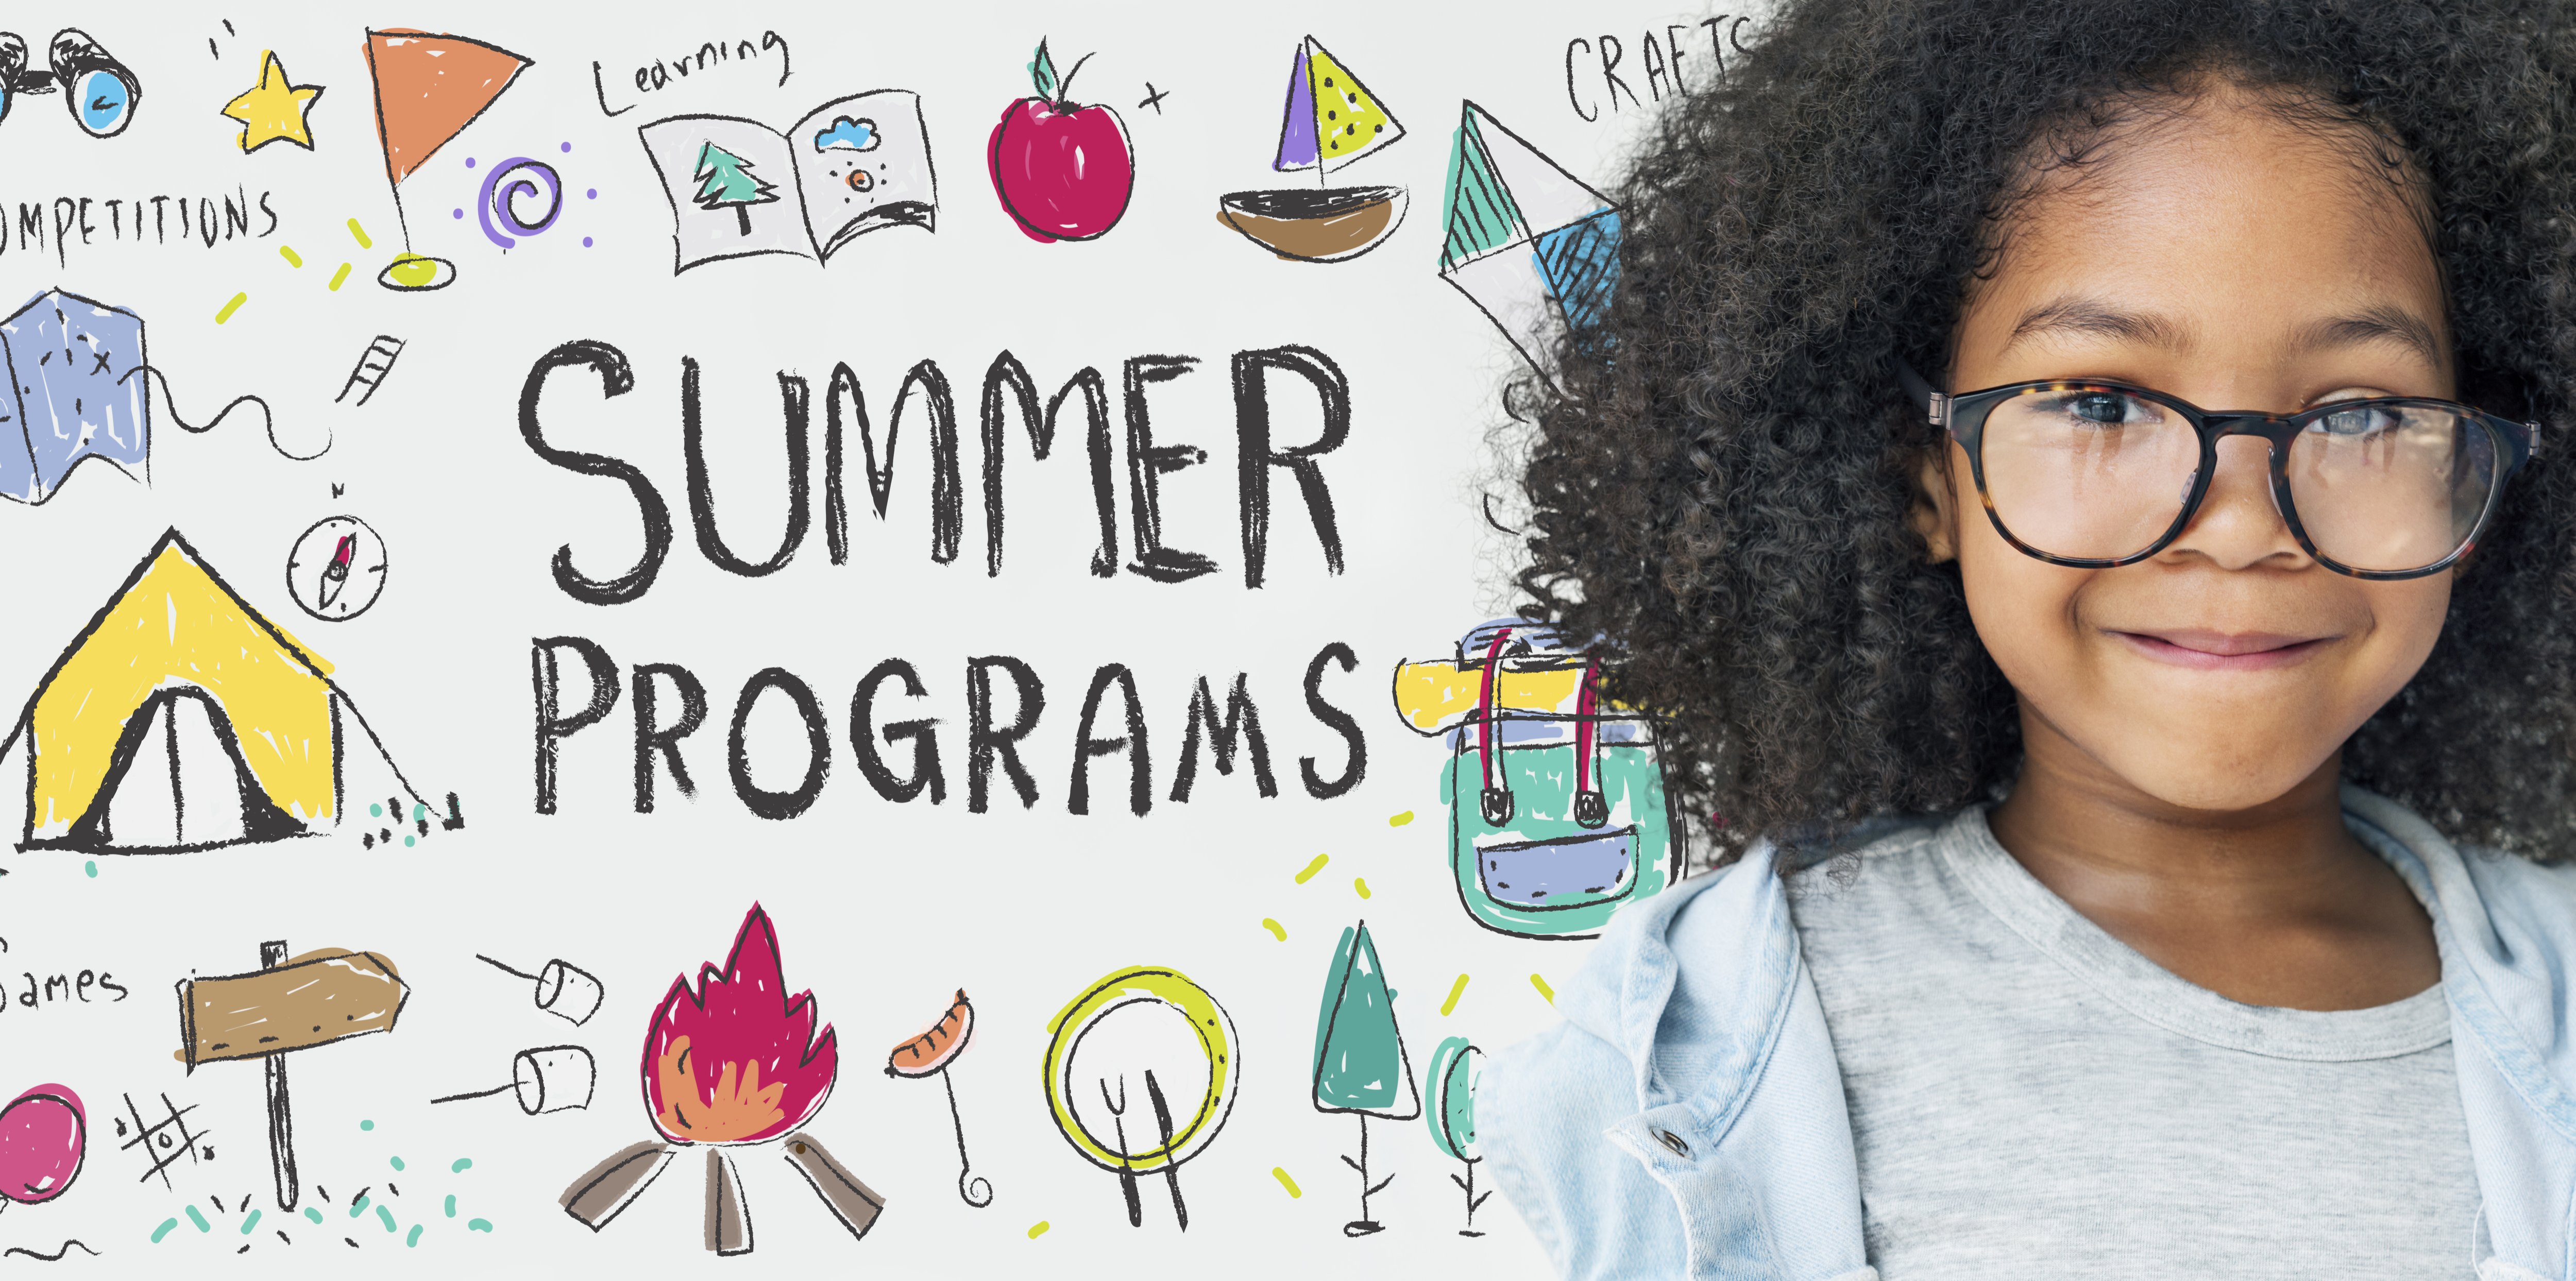 Summer Programs Image